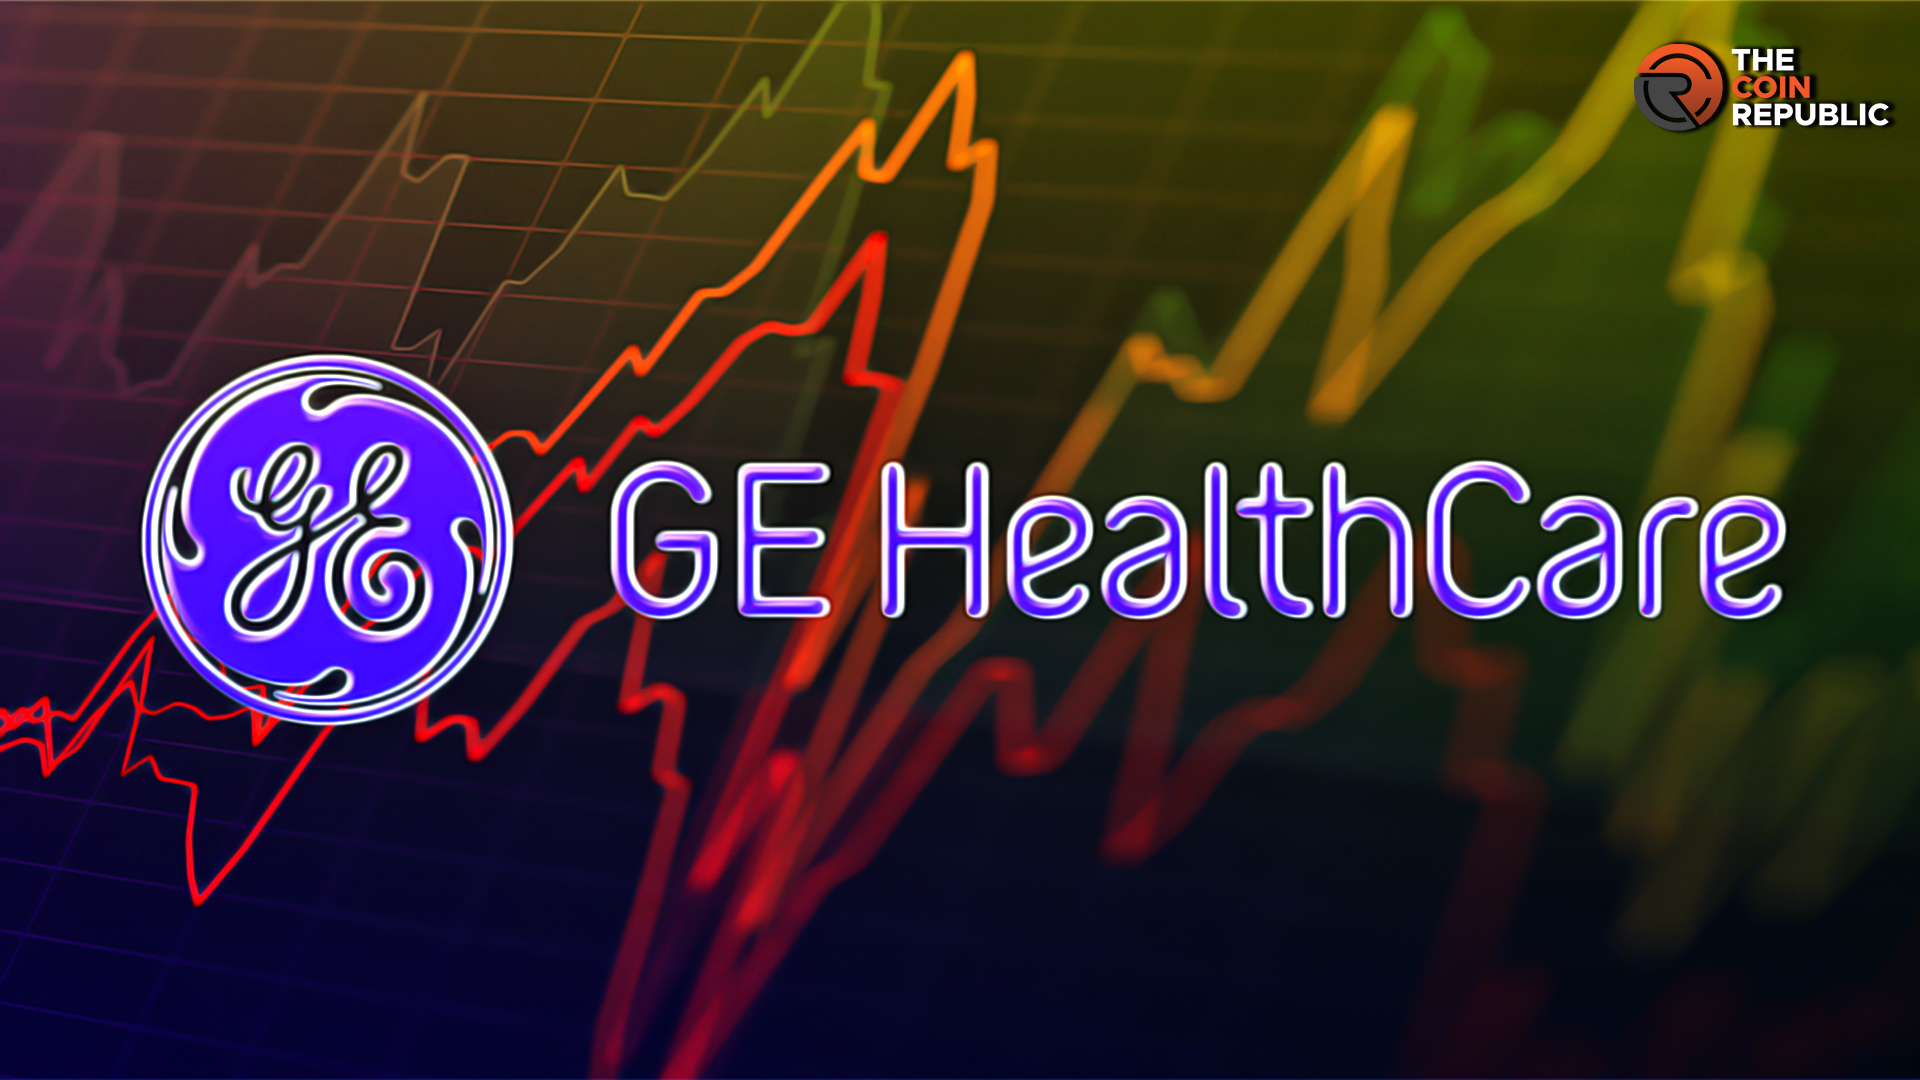 GEHC Stock Struggling Below 70; Will it Oppose the Decline?